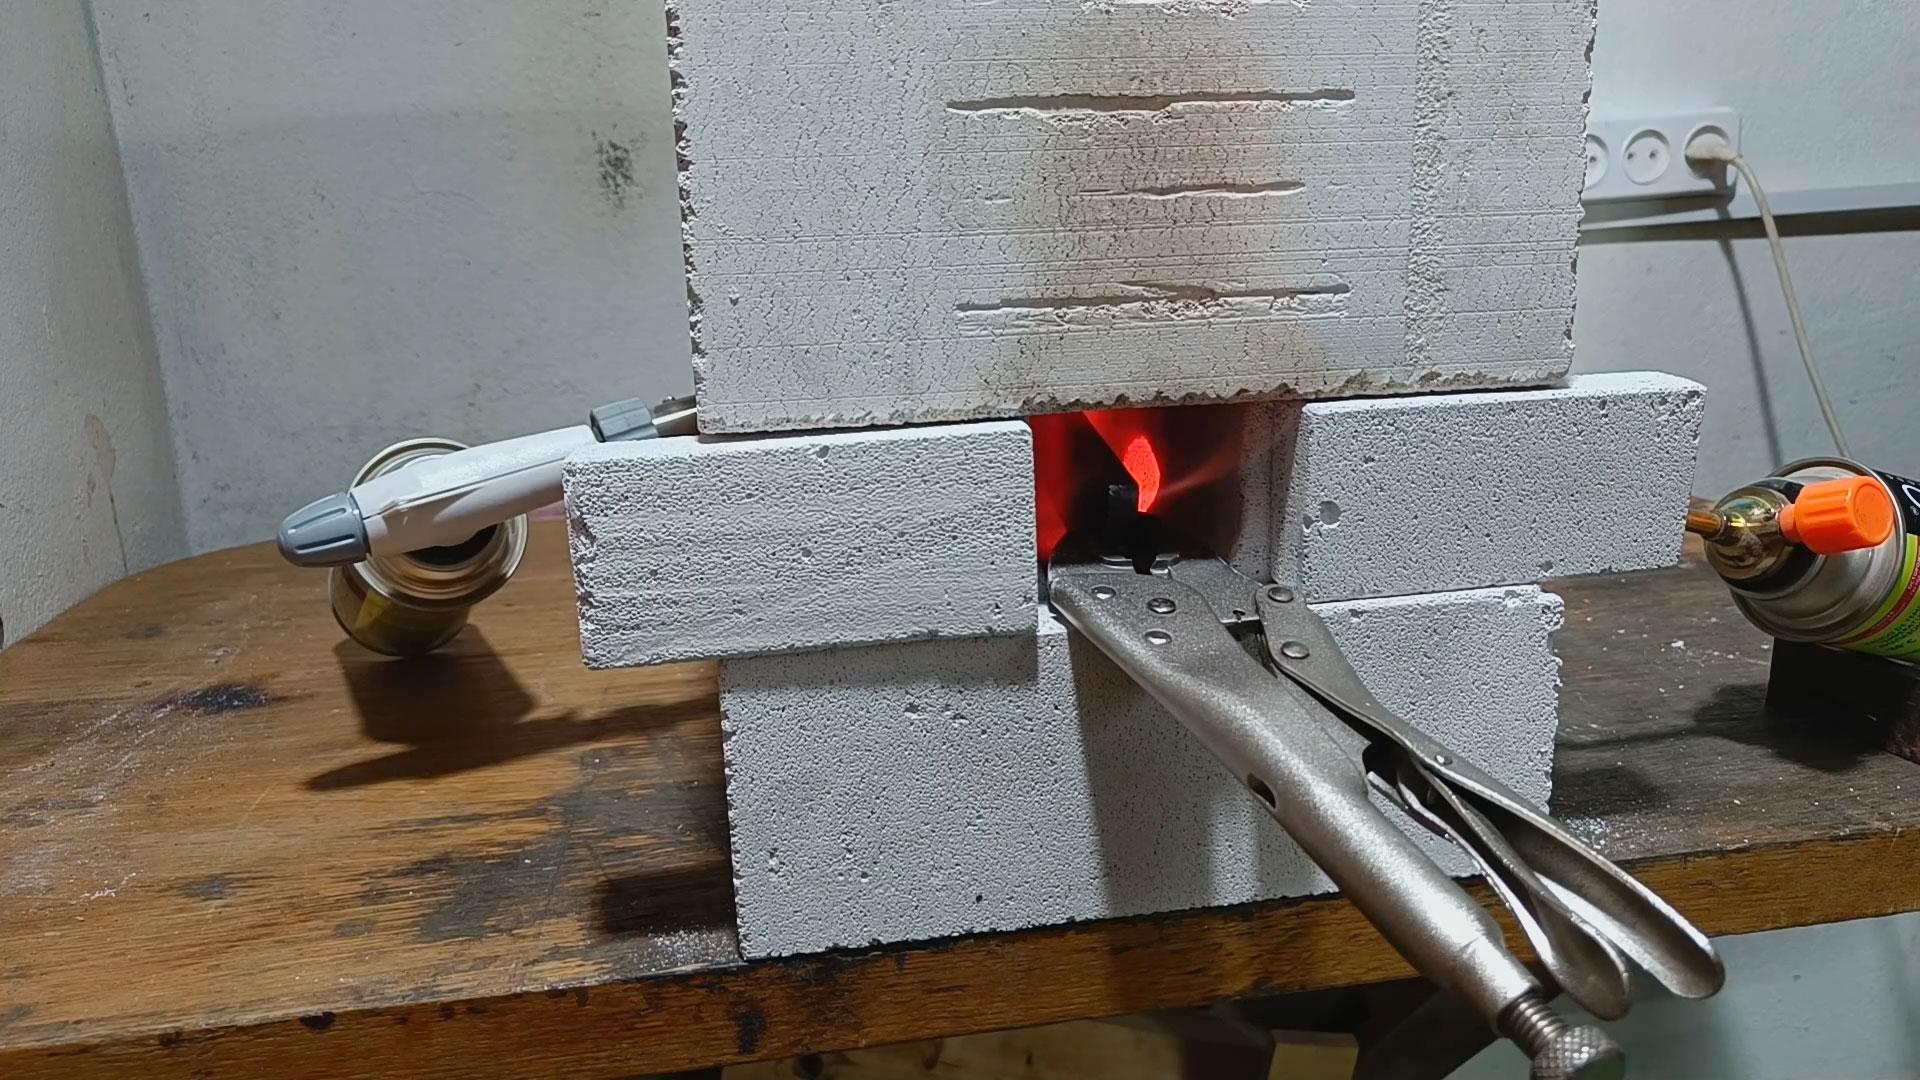 DIY mini forge for knife making 3d model